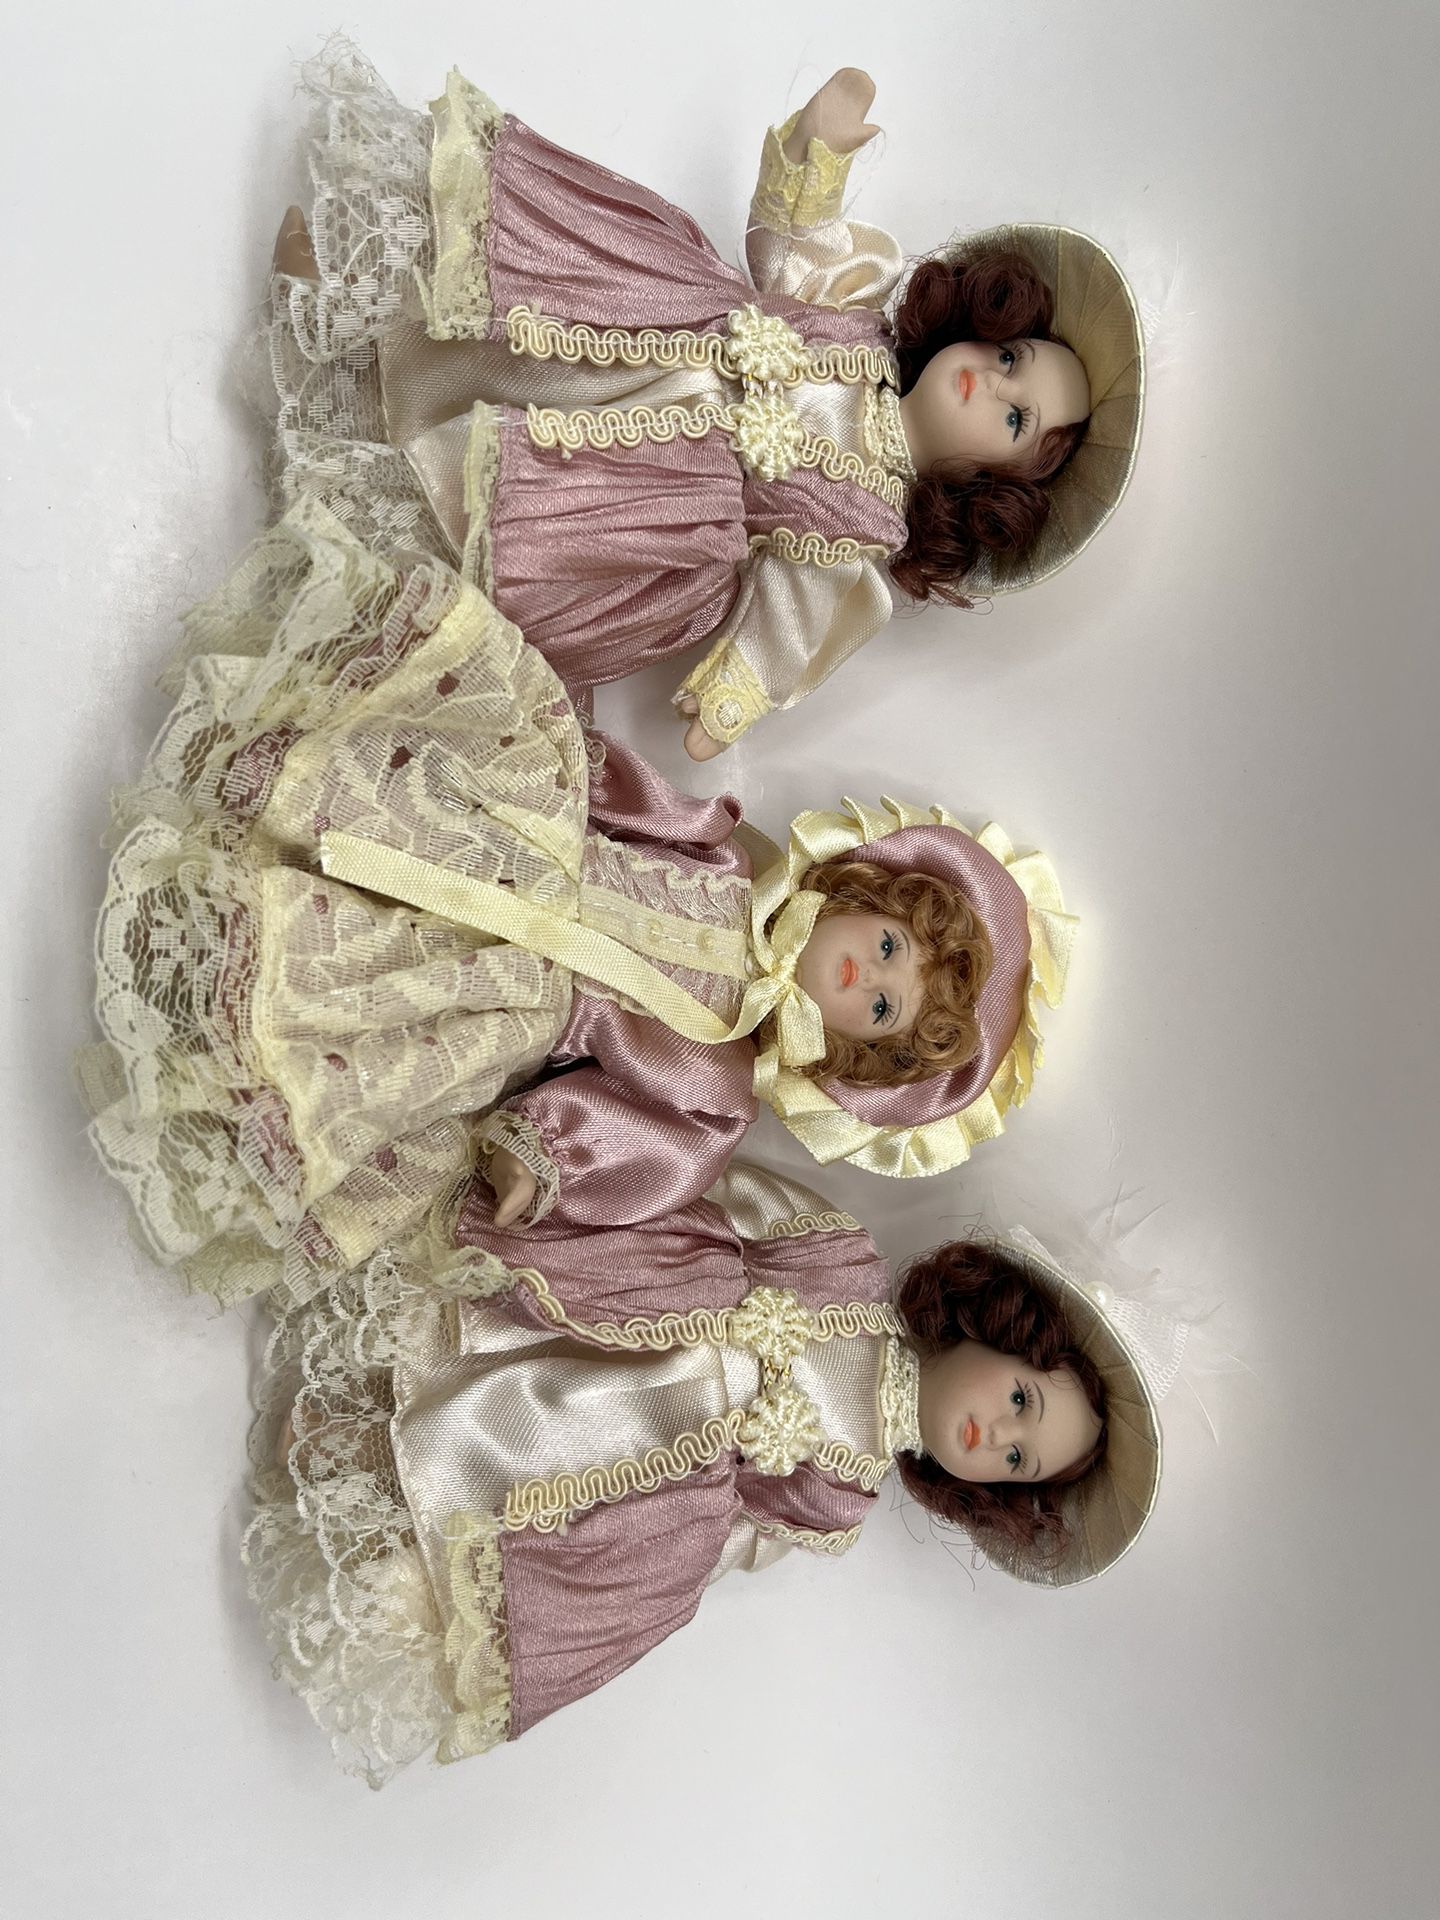 Porcelain Doll. Set Of 3. Height : 5” each